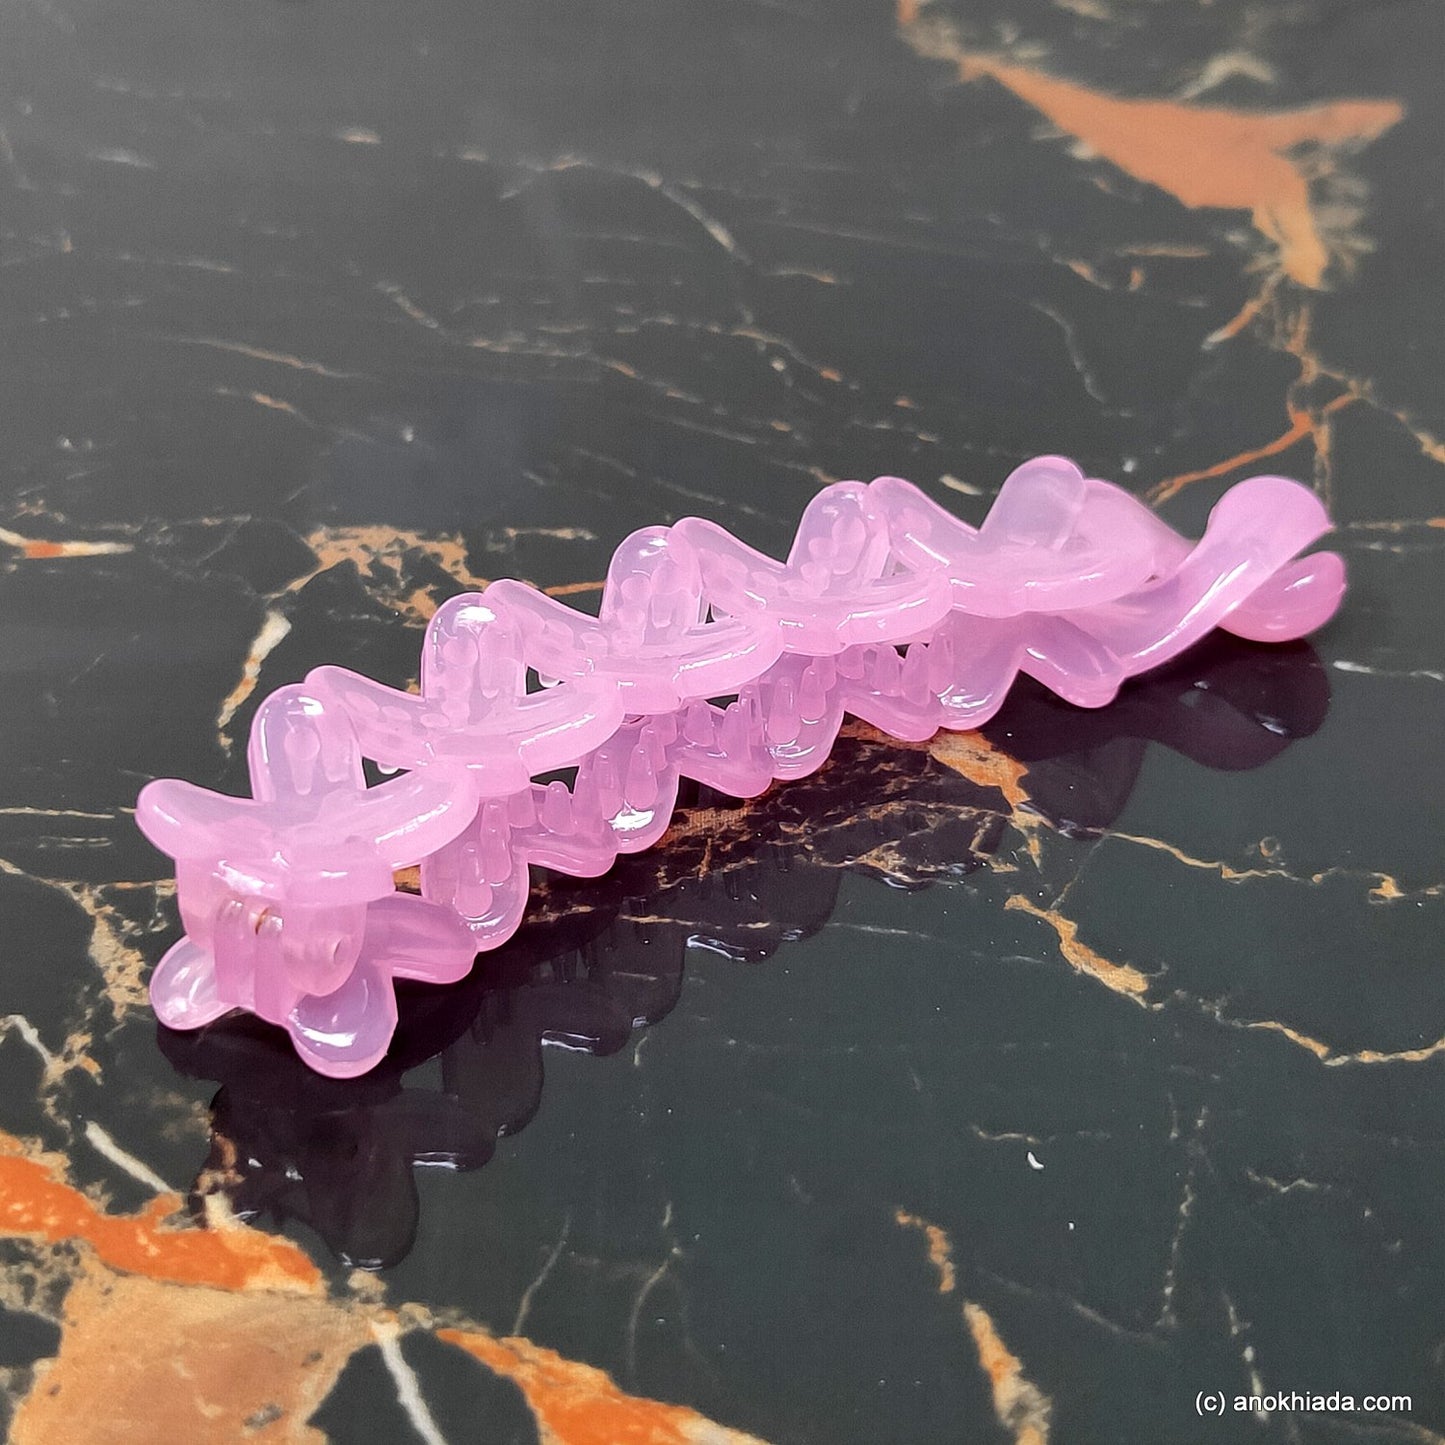 Criss Cross Translucent Design Small Baby Pink Banana Hair Clip for Girls & Woman (98-17i Banana Hair Clips)